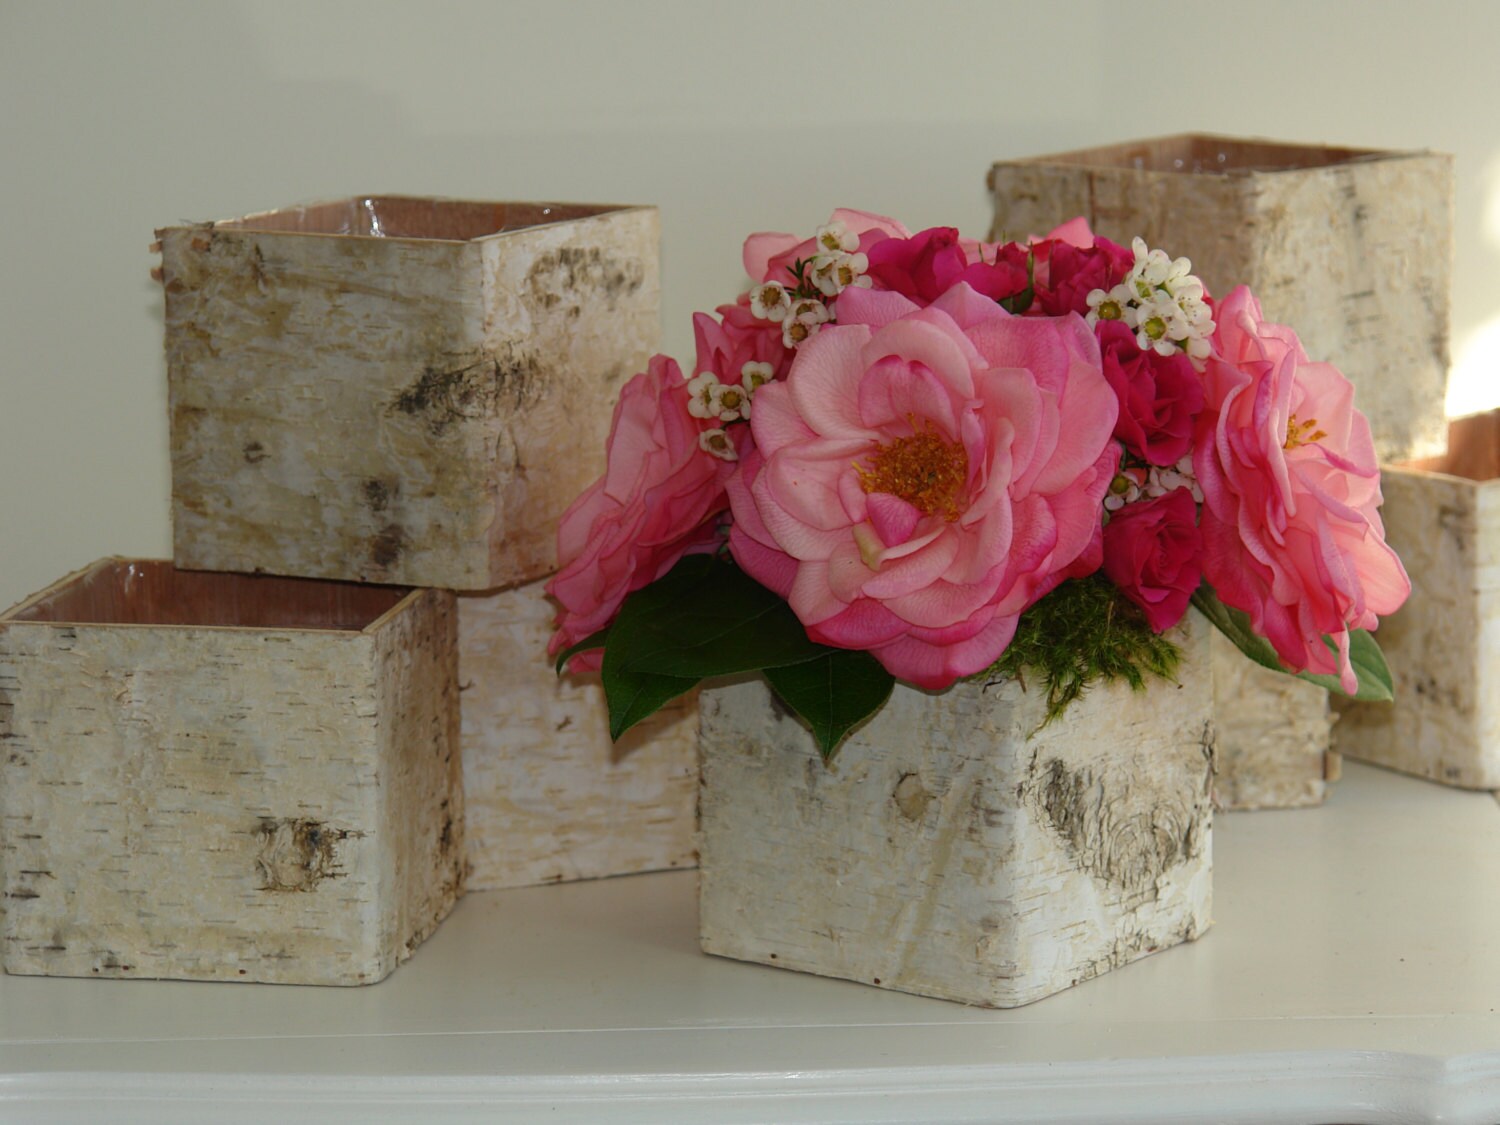 birch bark vases wood boxes floral arrangement by aniamelisa